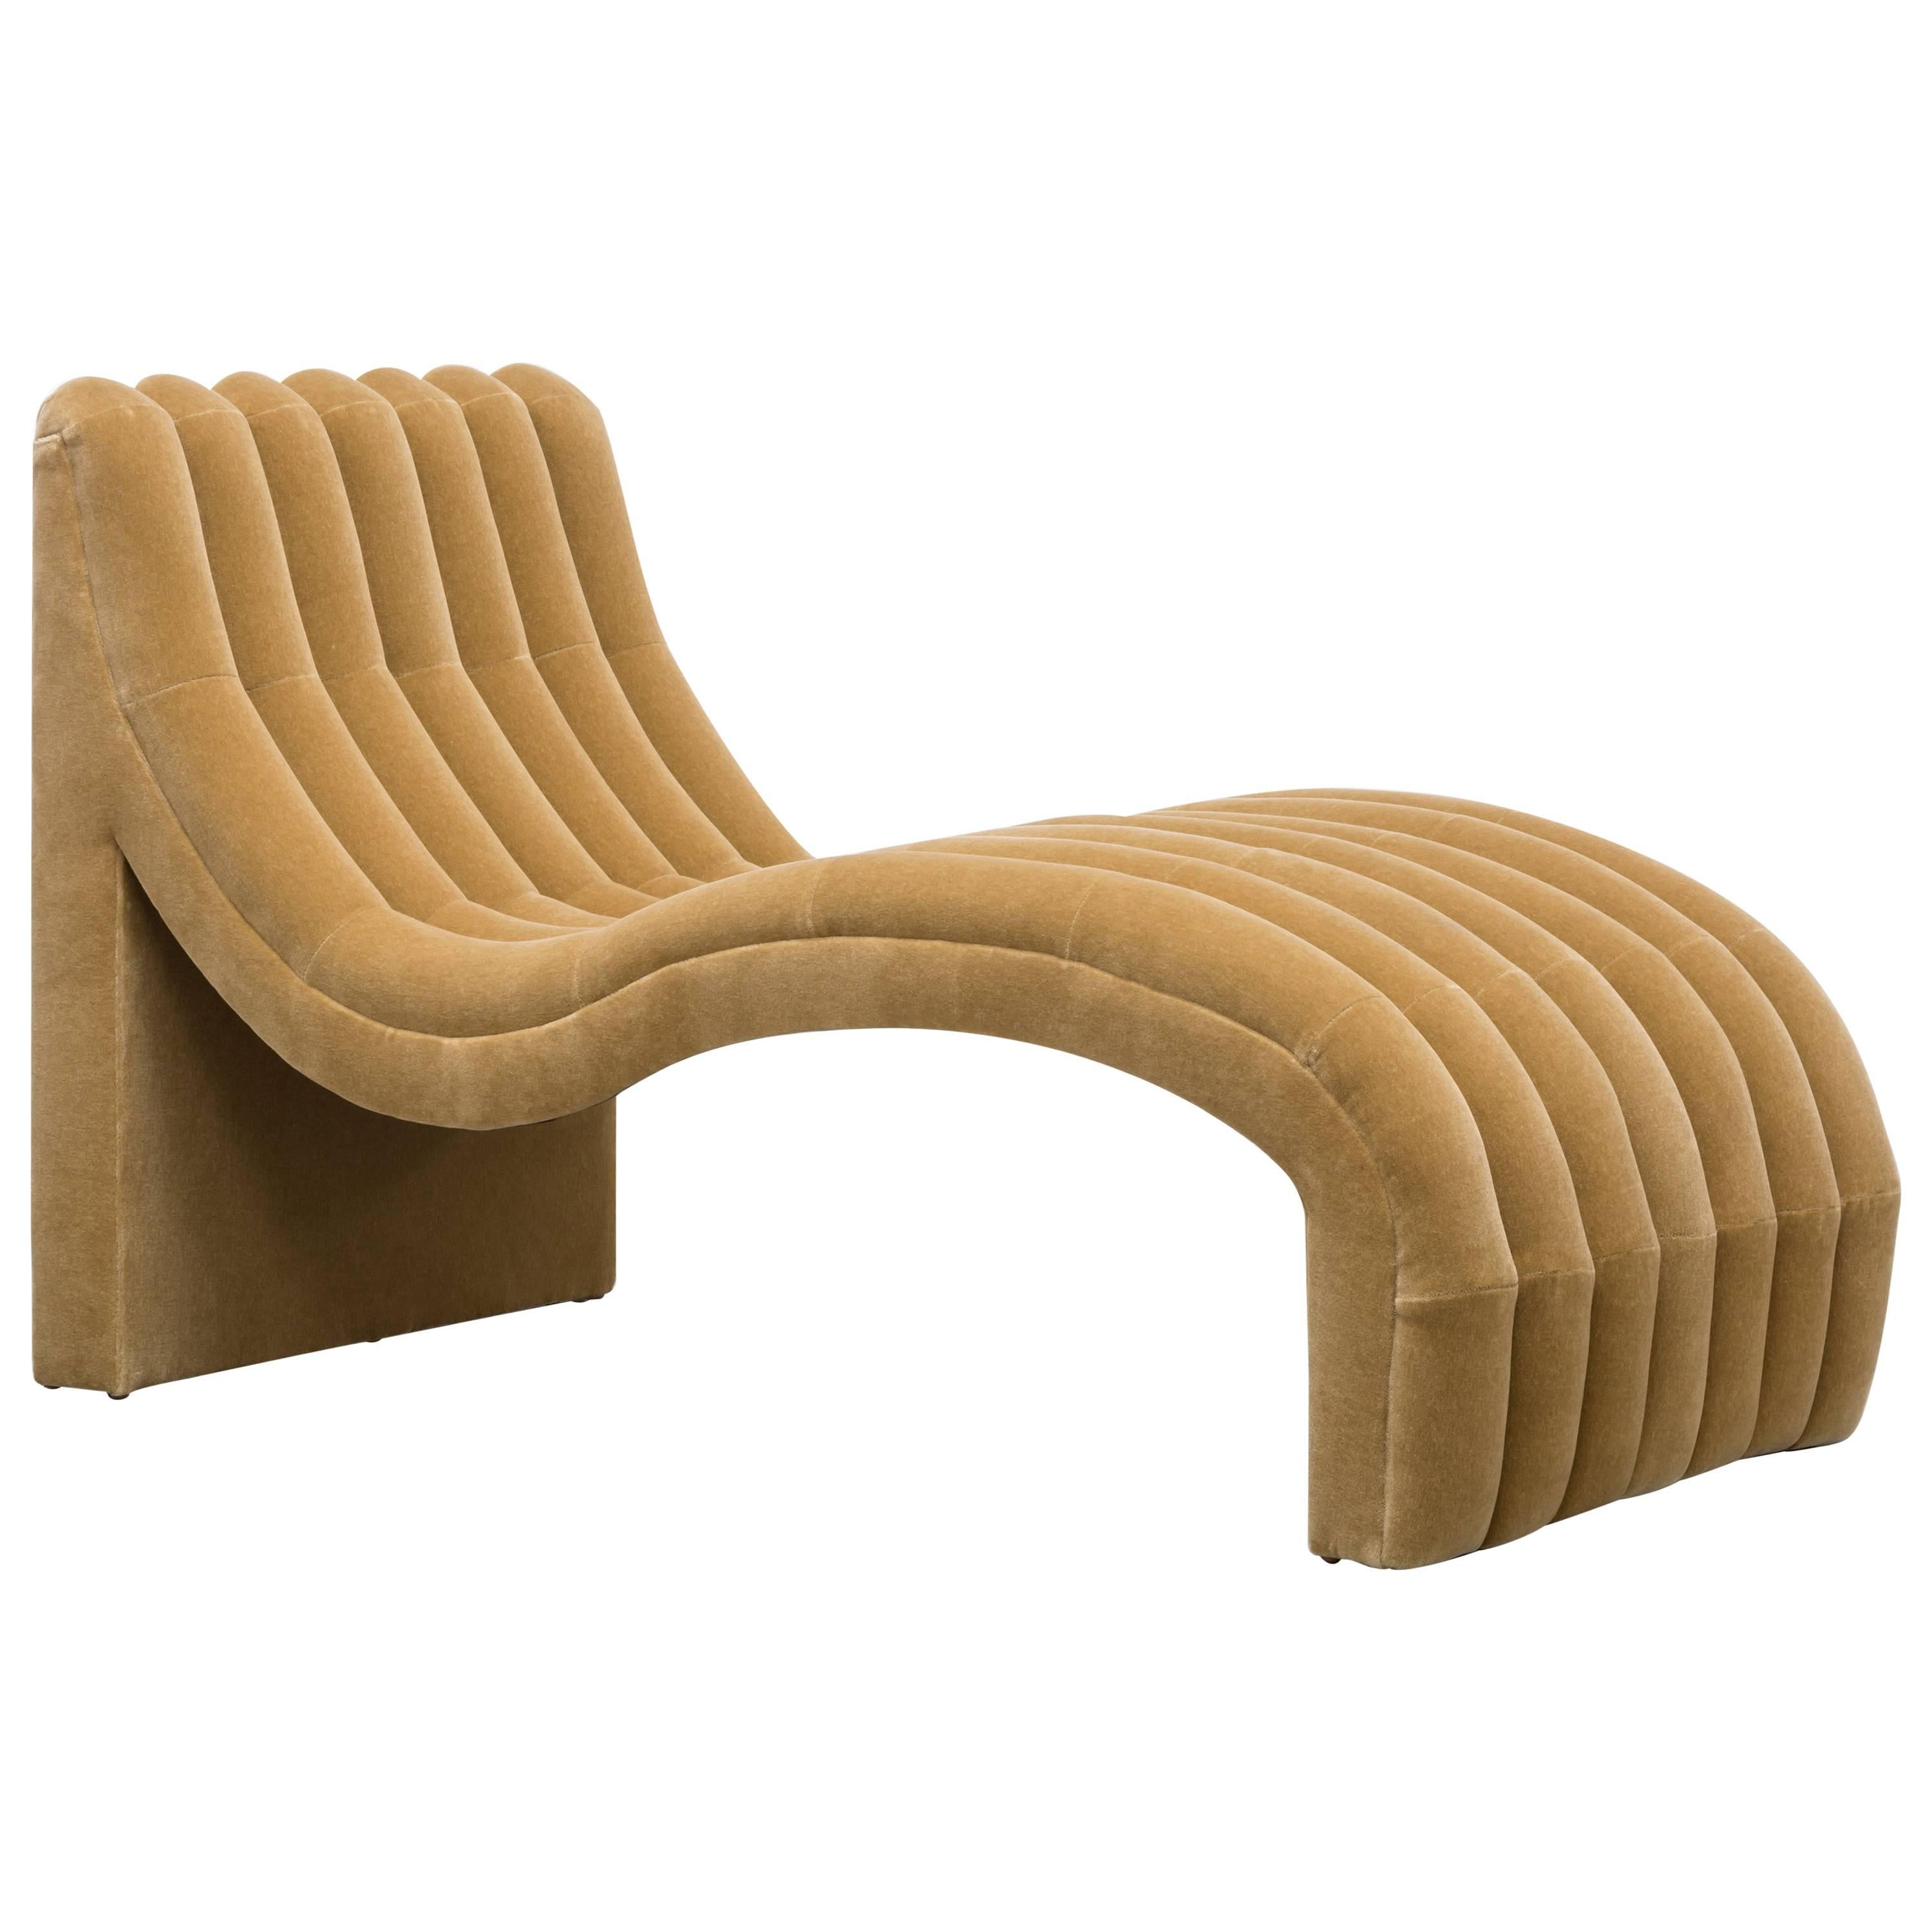 SACHA CHAISE - Modern Chaise Lounge in Camel Luxury Velvet